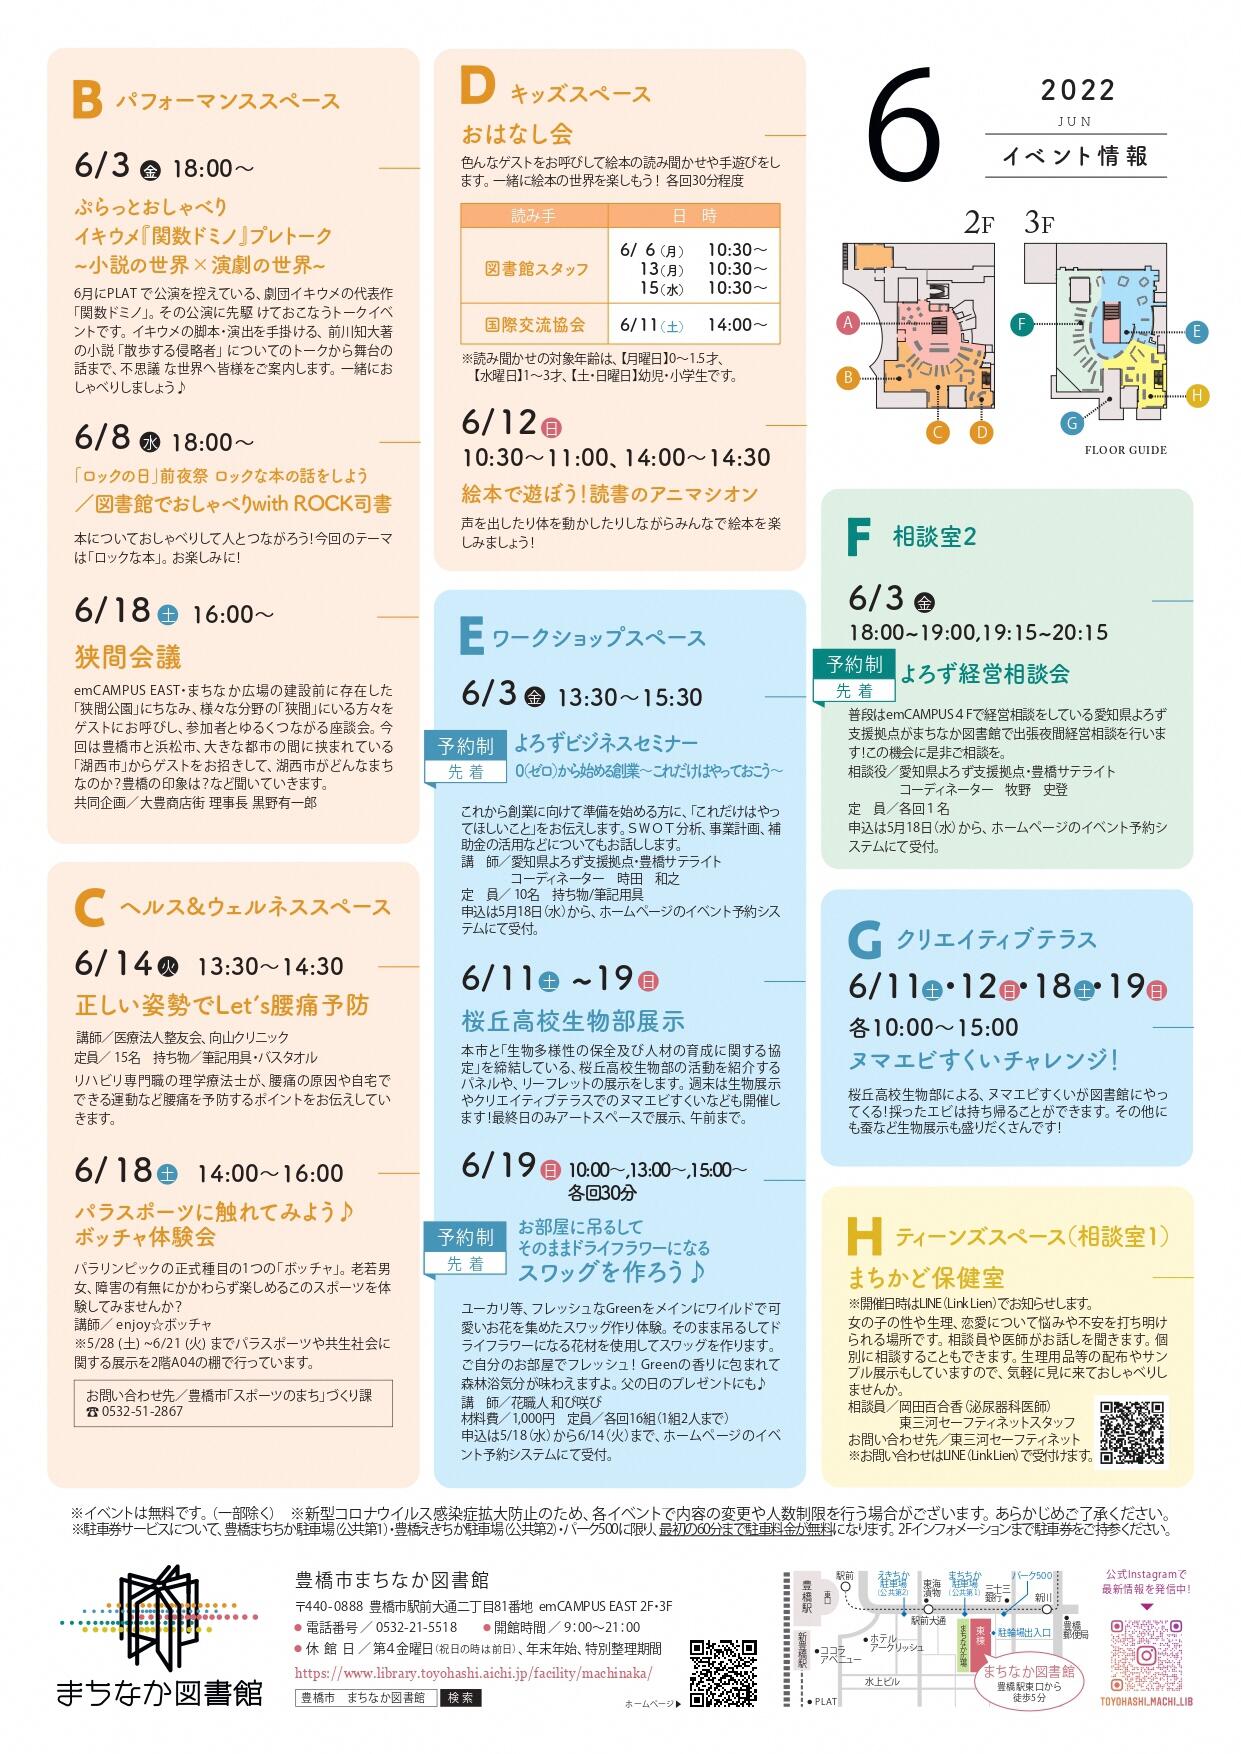 https://www.library.toyohashi.aichi.jp/facility/machinaka/event/81e37a077cb4bfaefbfe490d3a16d119.jpg